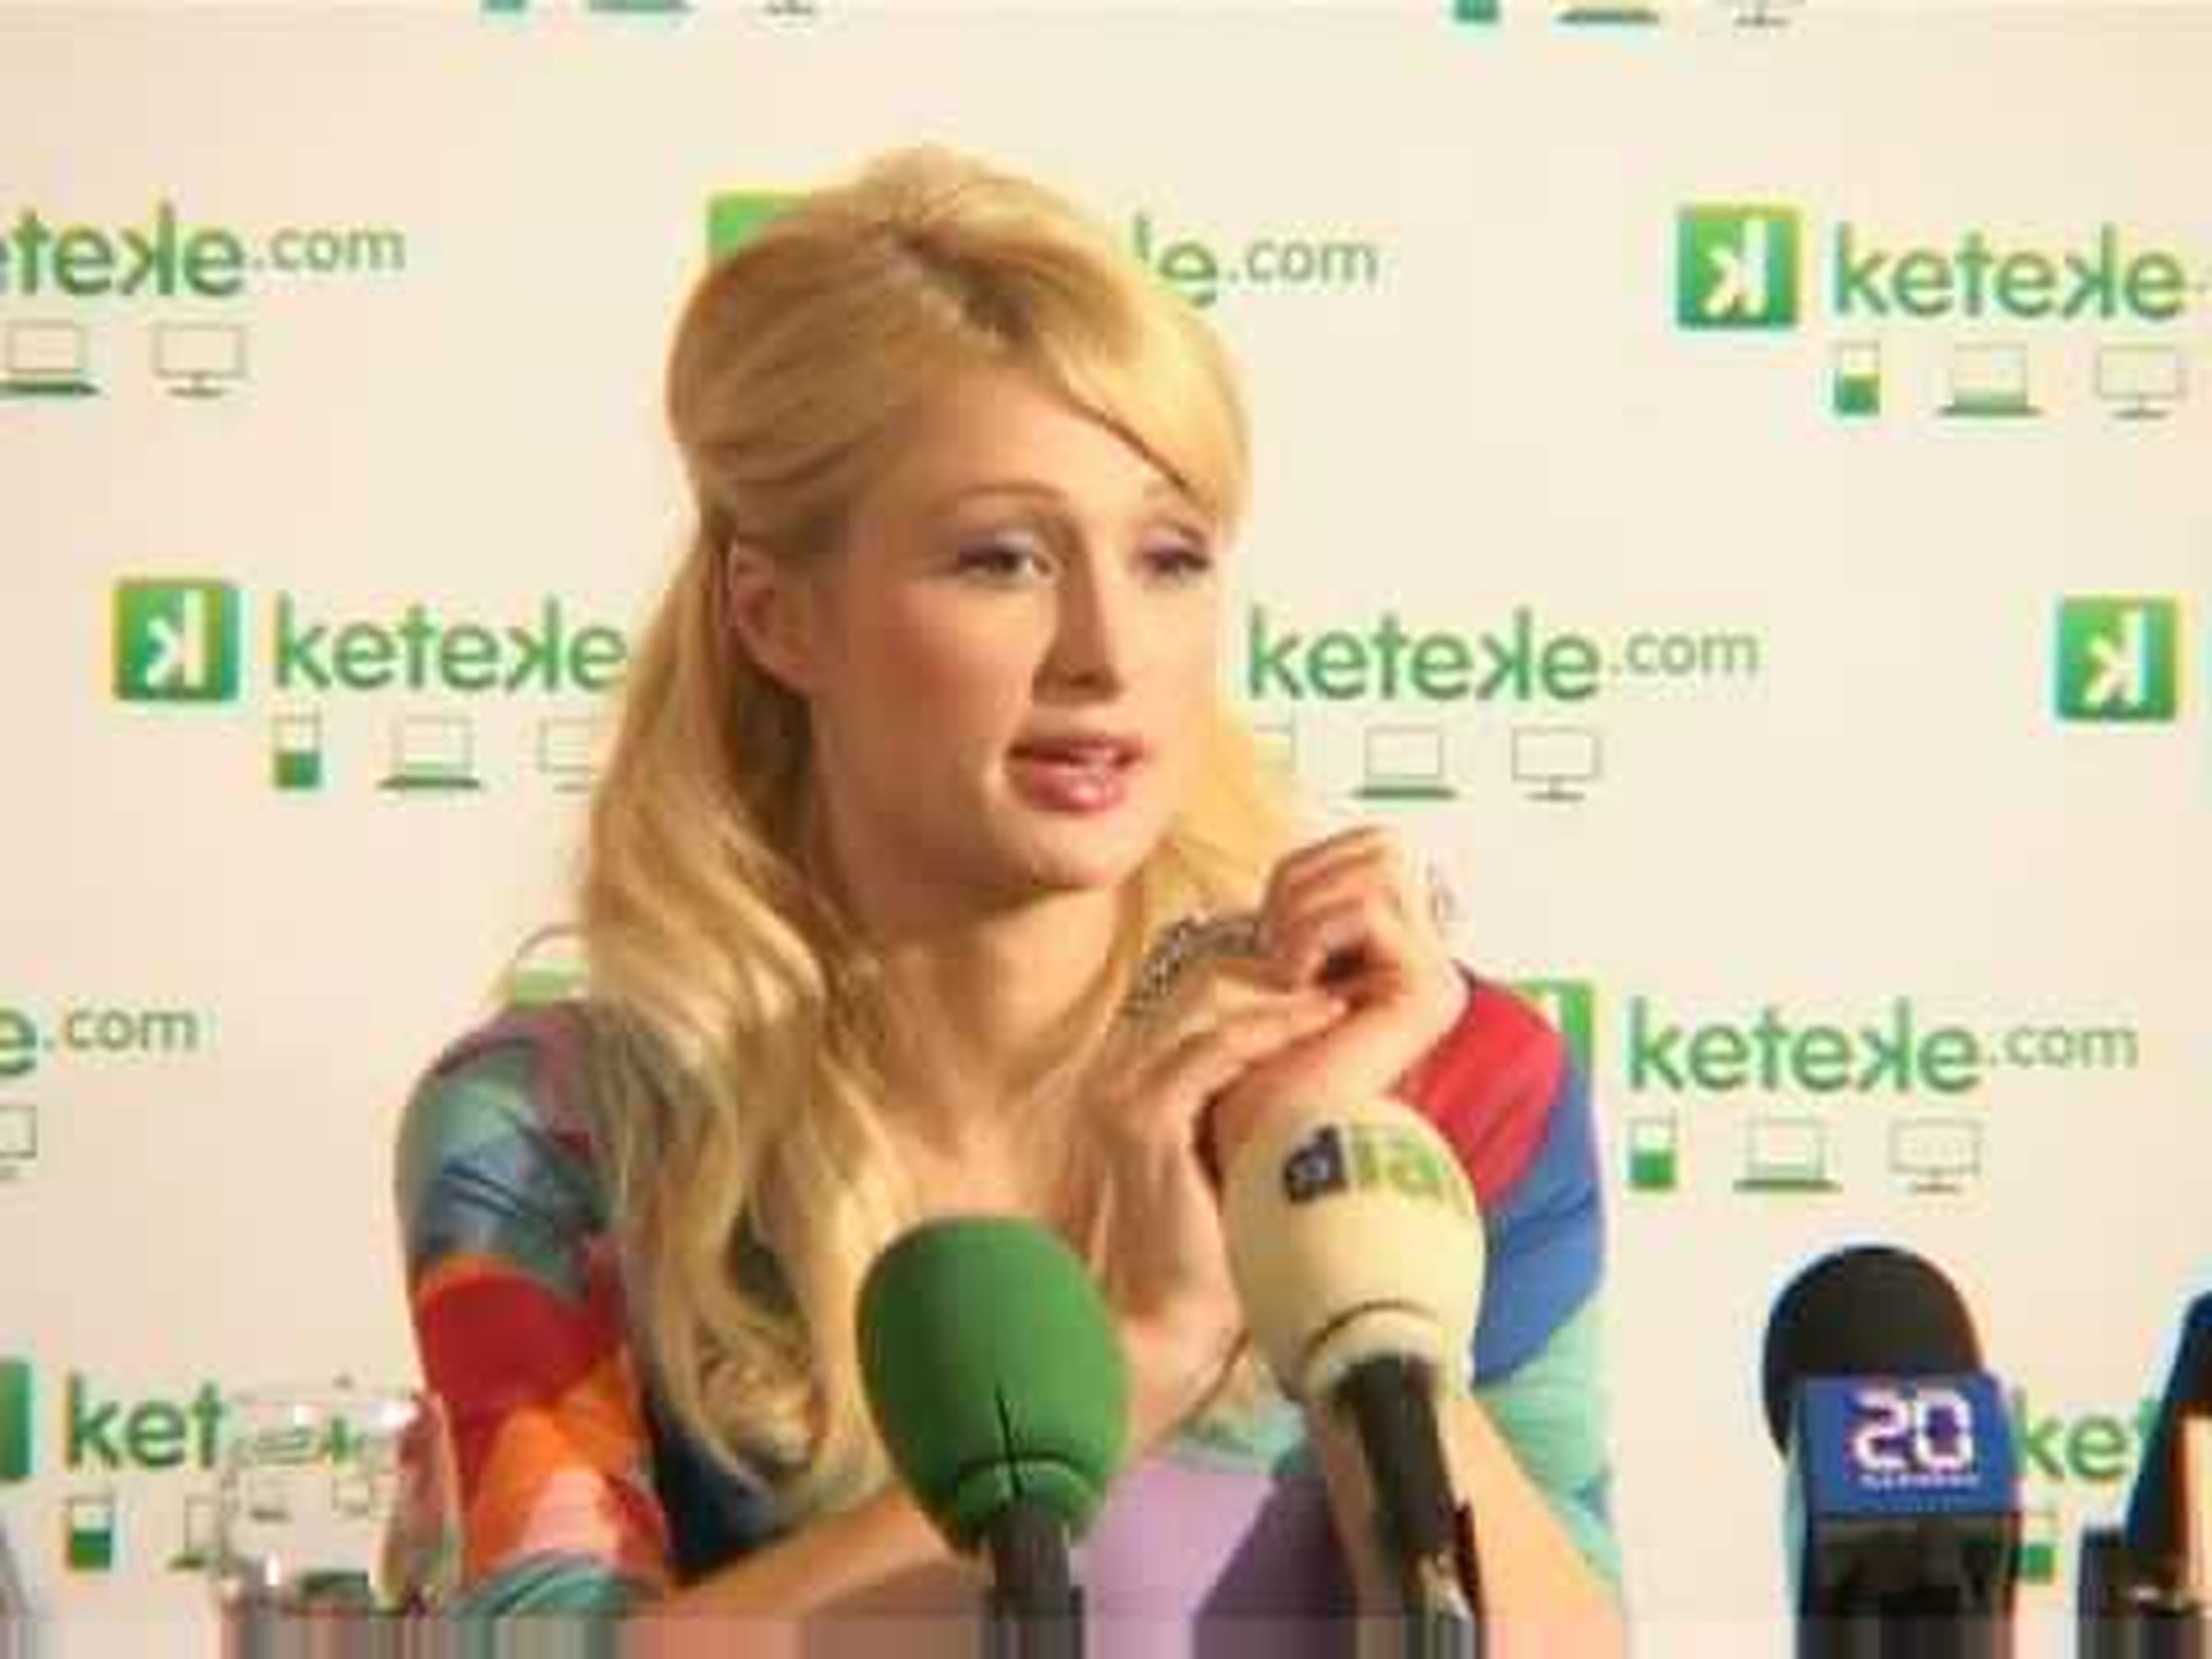 Esta es Paris Hilton presentando Keteke